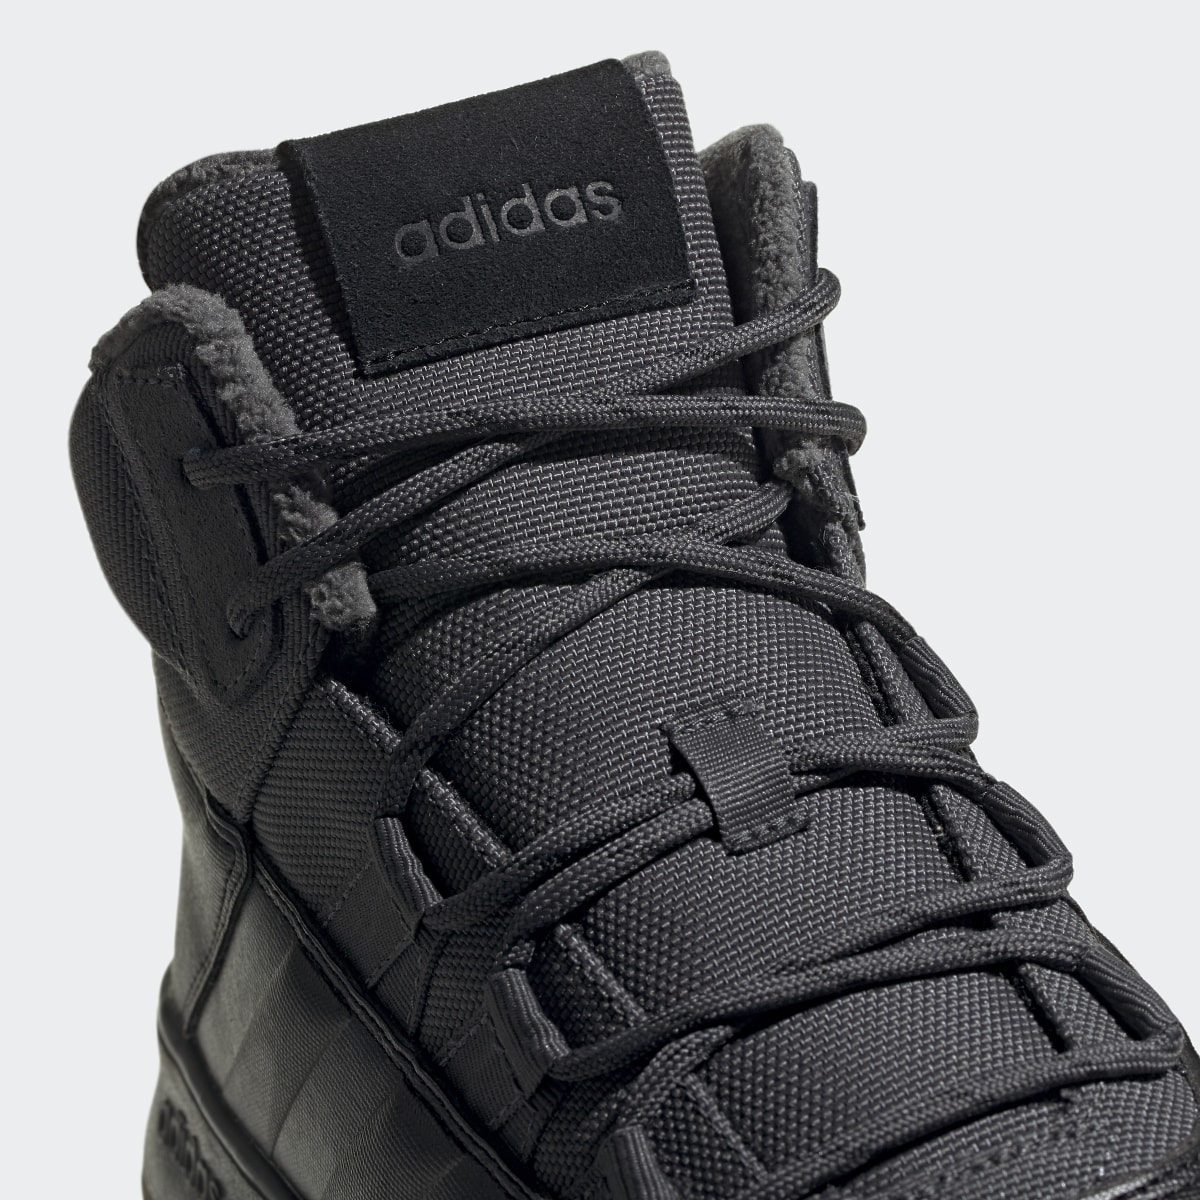 Adidas Fusion Winter Boots. 8